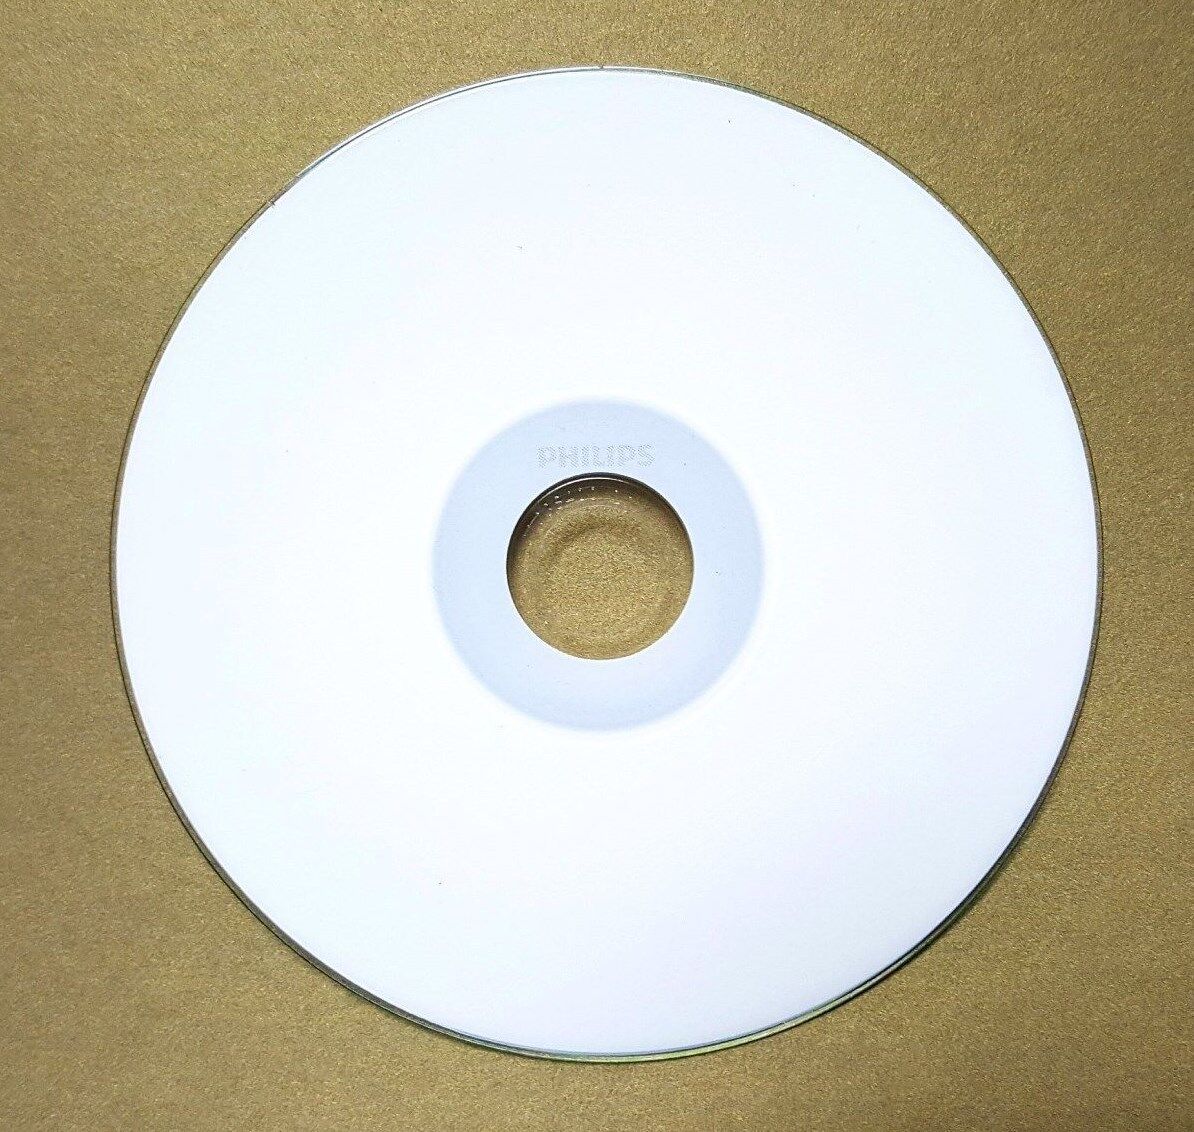 25 PHILIPS Blank 52X CD-R CDR 700MB White Inkjet Printable Media Disc in Sleeves